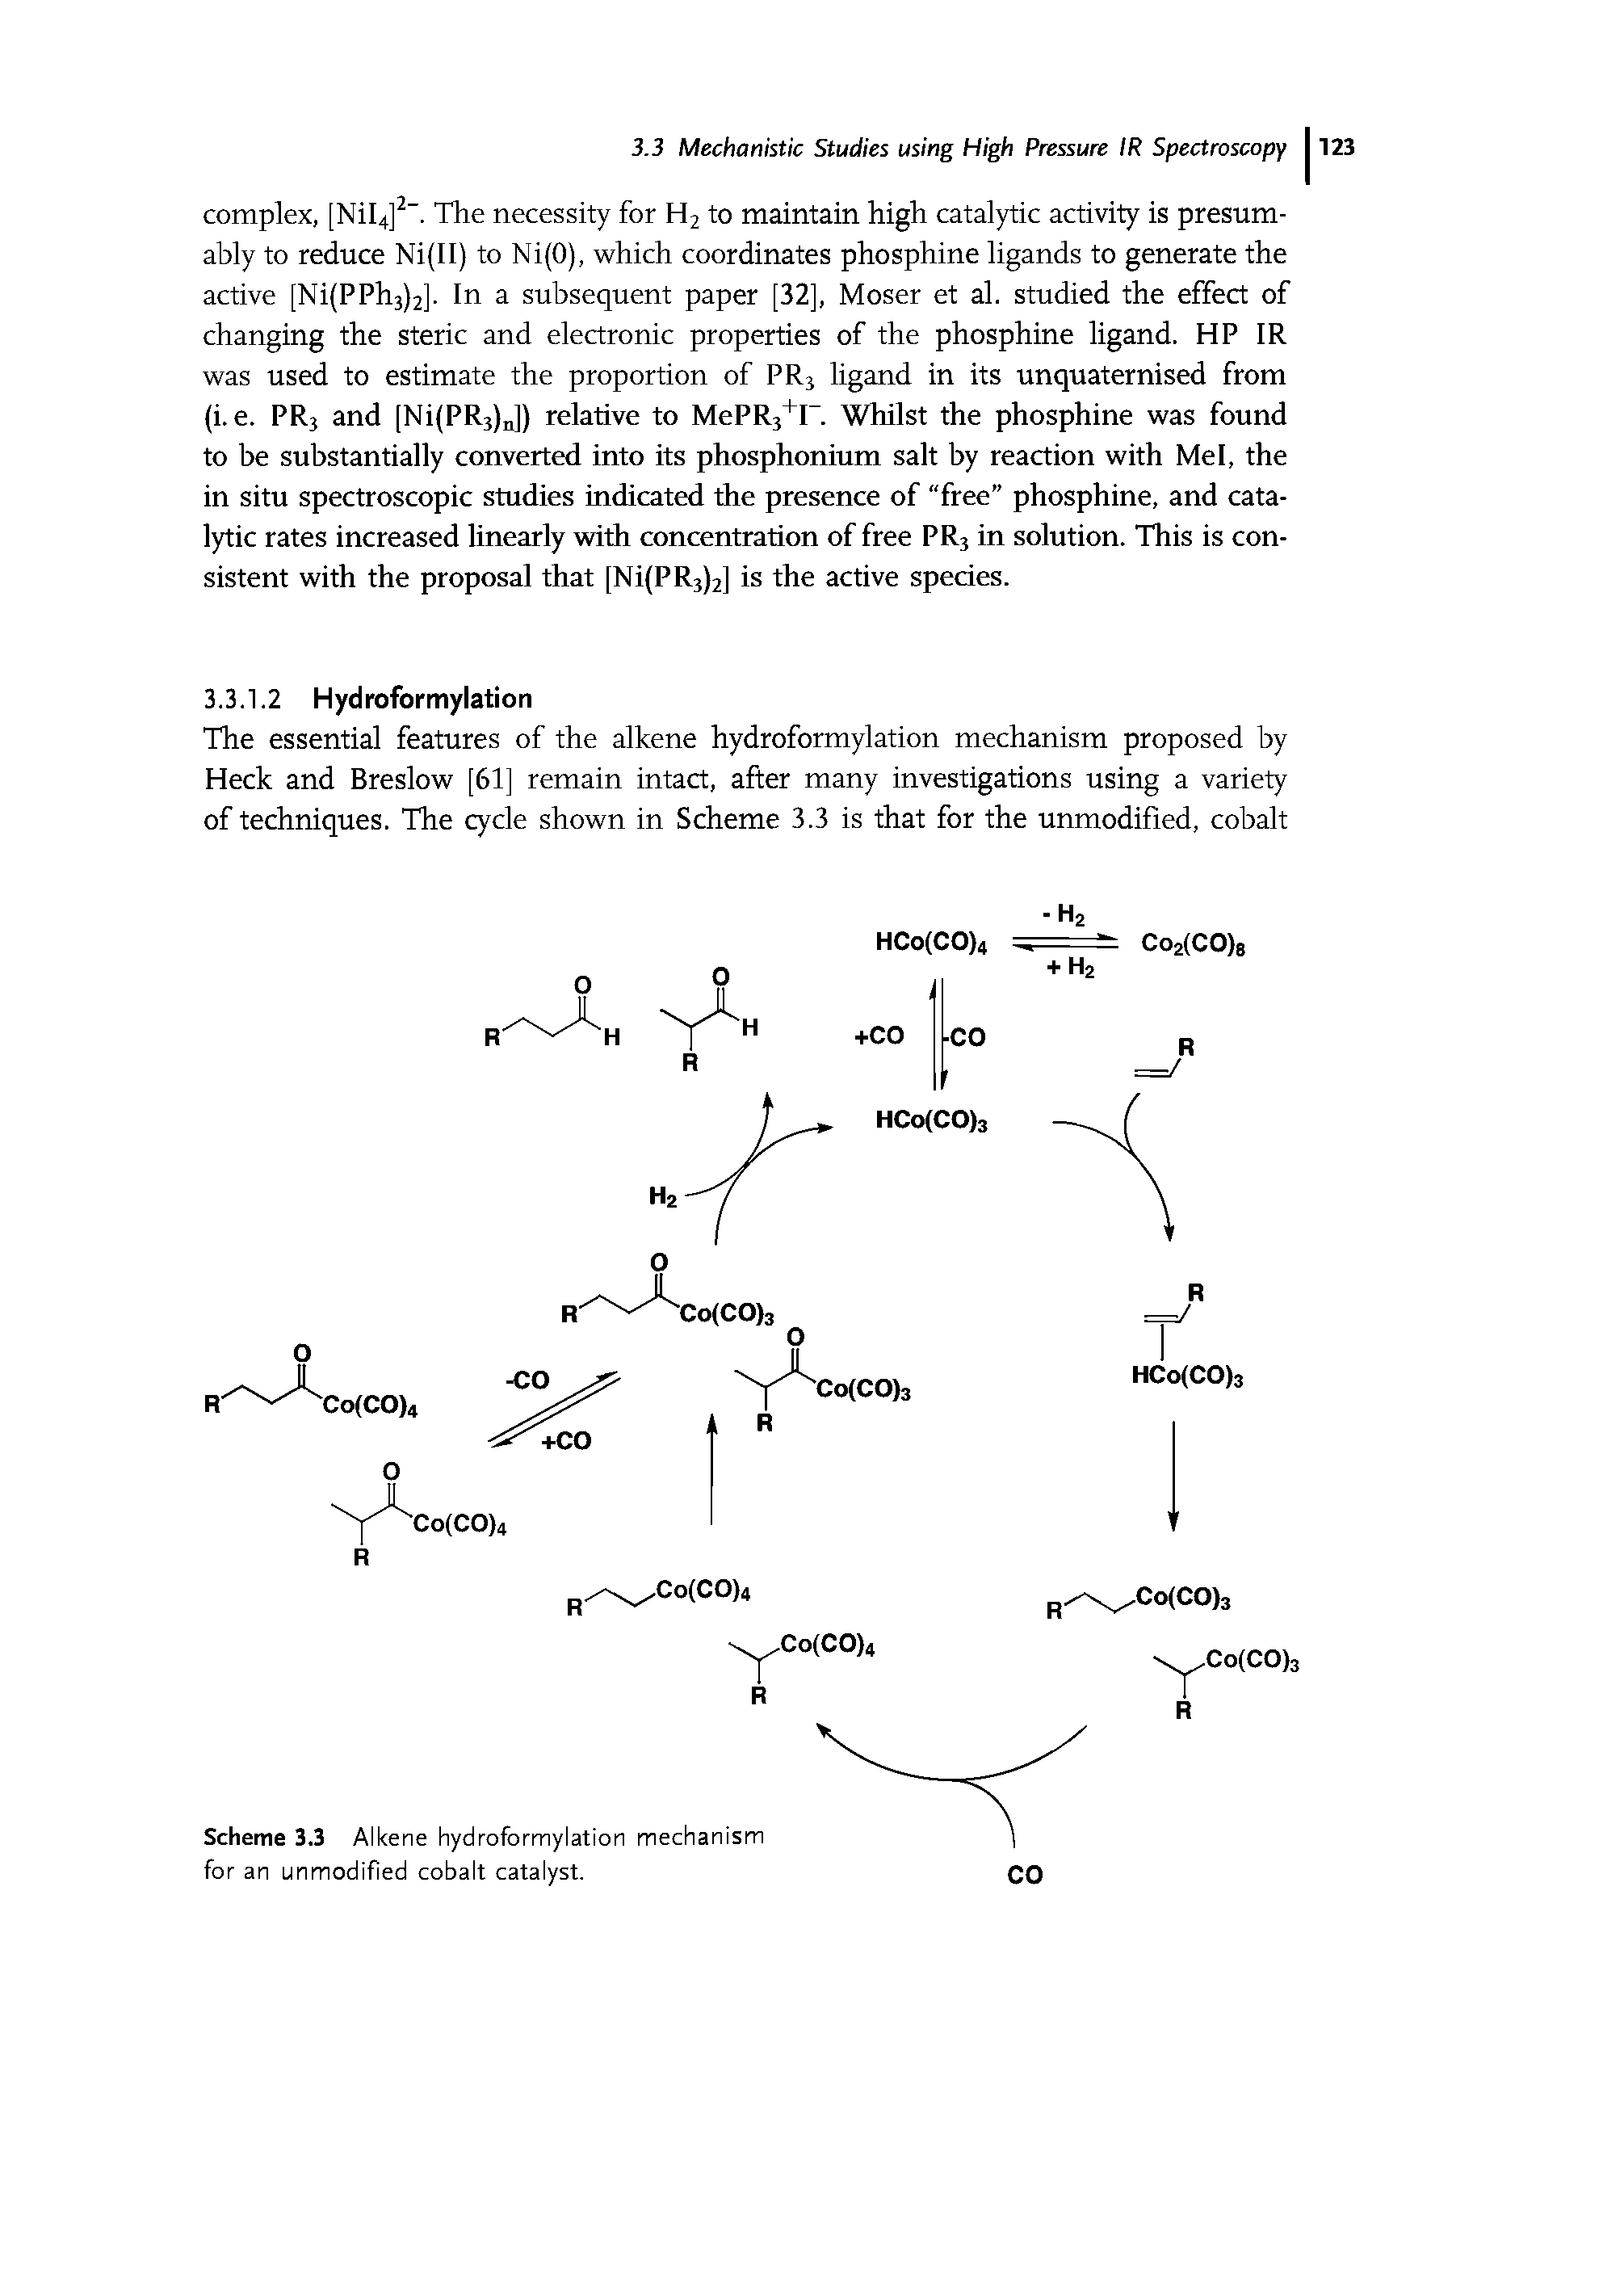 Scheme 3.3 Alkene hydroformylation mechanism for an unmodified cobalt catalyst.